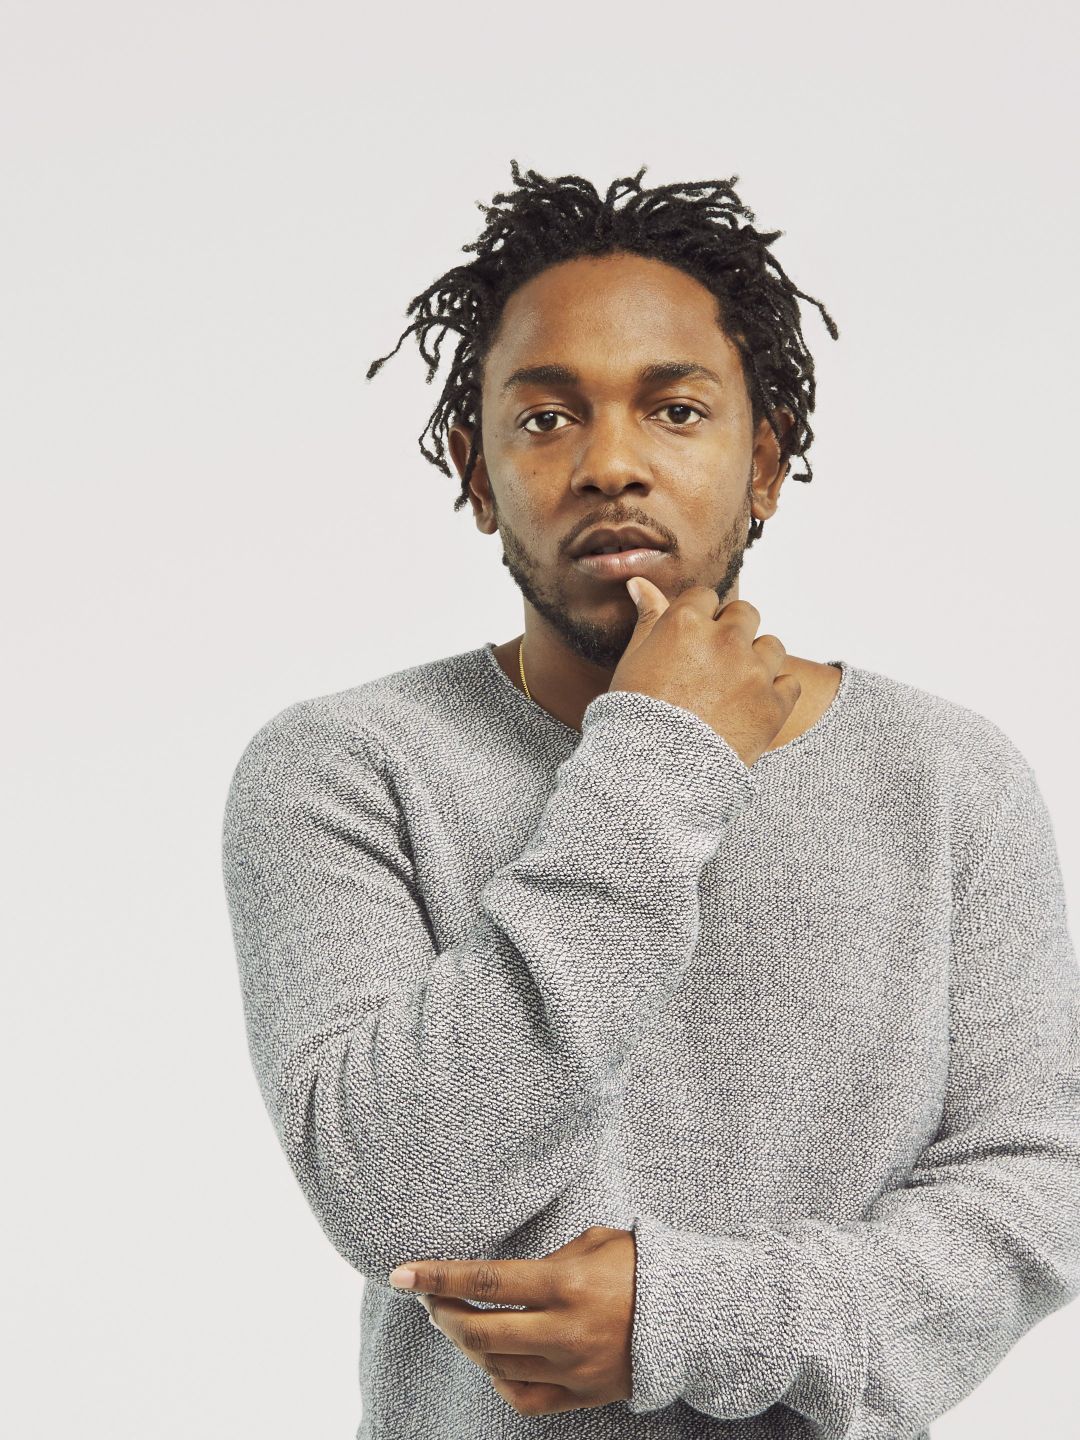 Kendrick Lamar early childhood